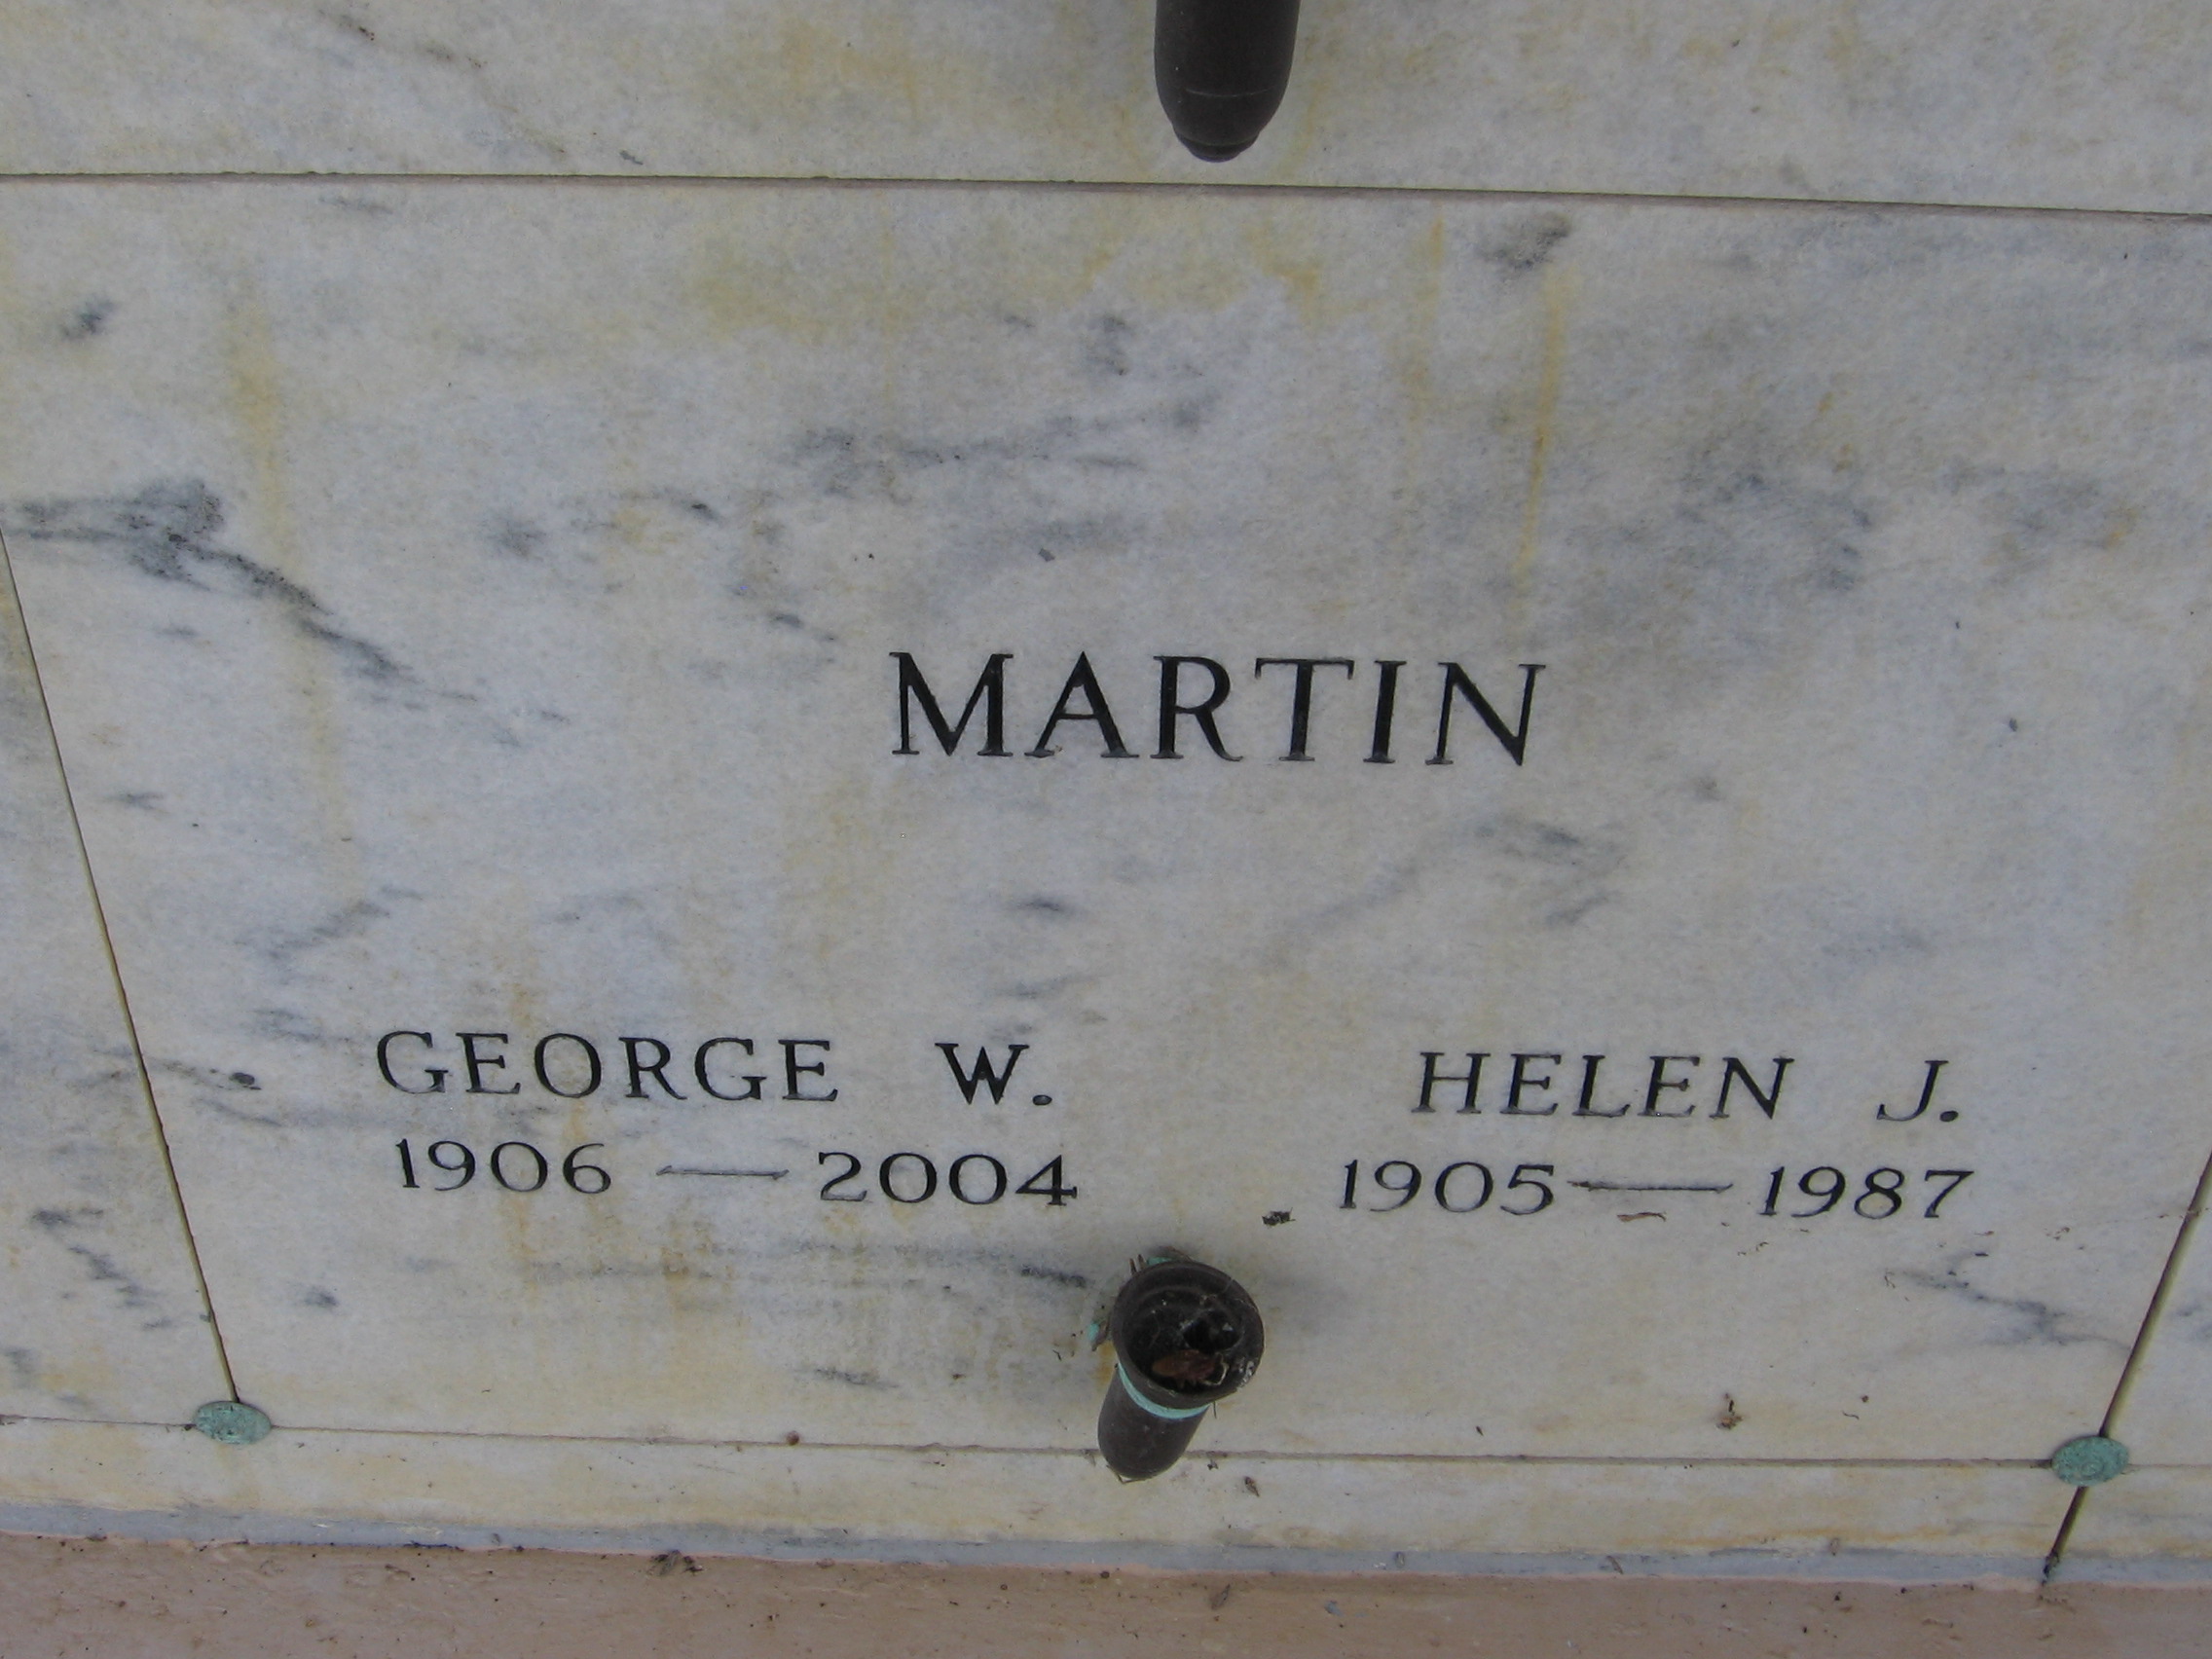 George W Martin